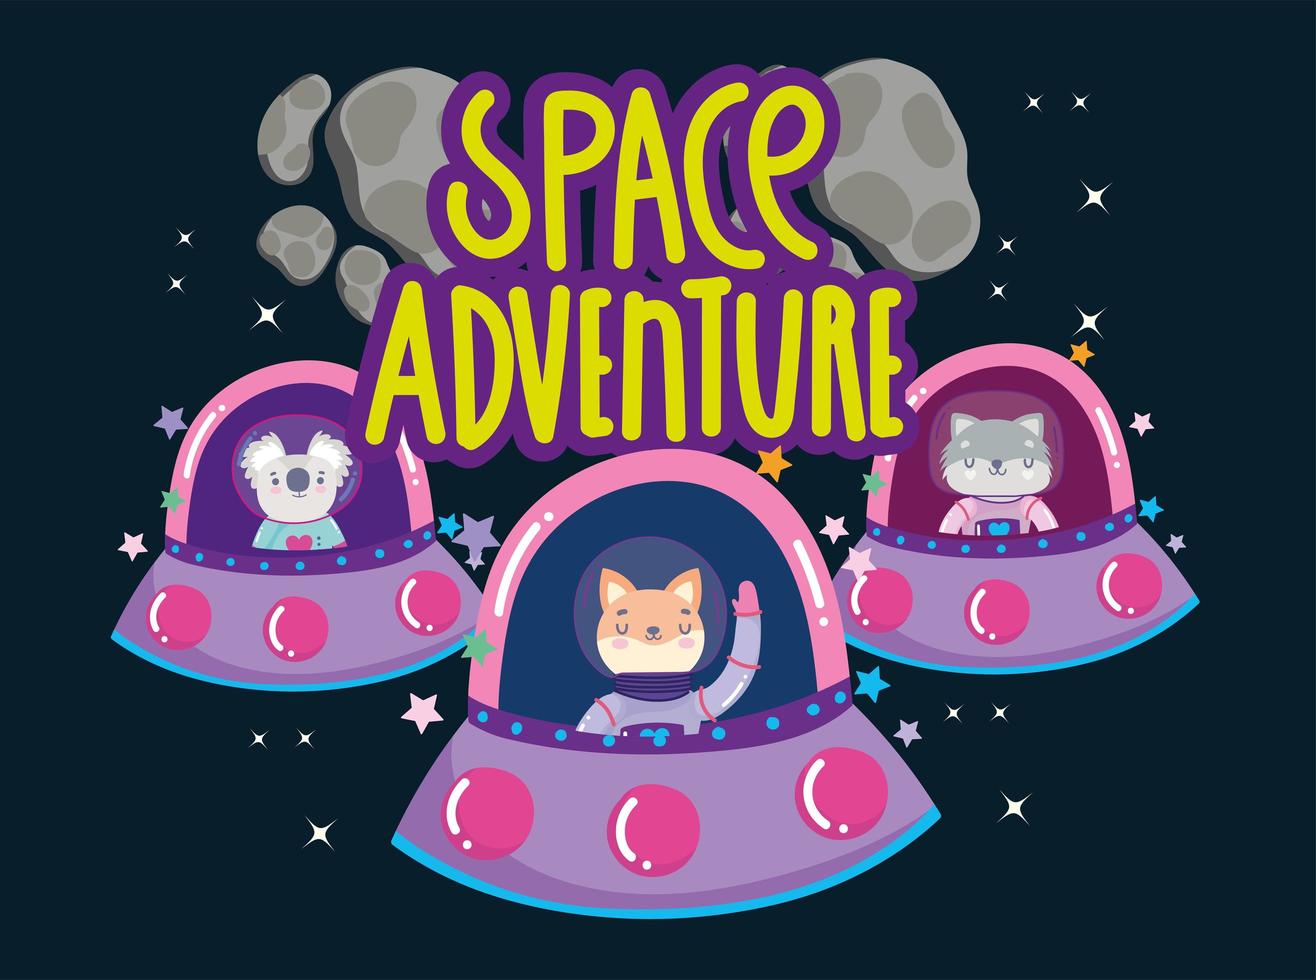 espacio astronauta gatos koala y mapache nave espacial aventuras explorar animal dibujos animados vector